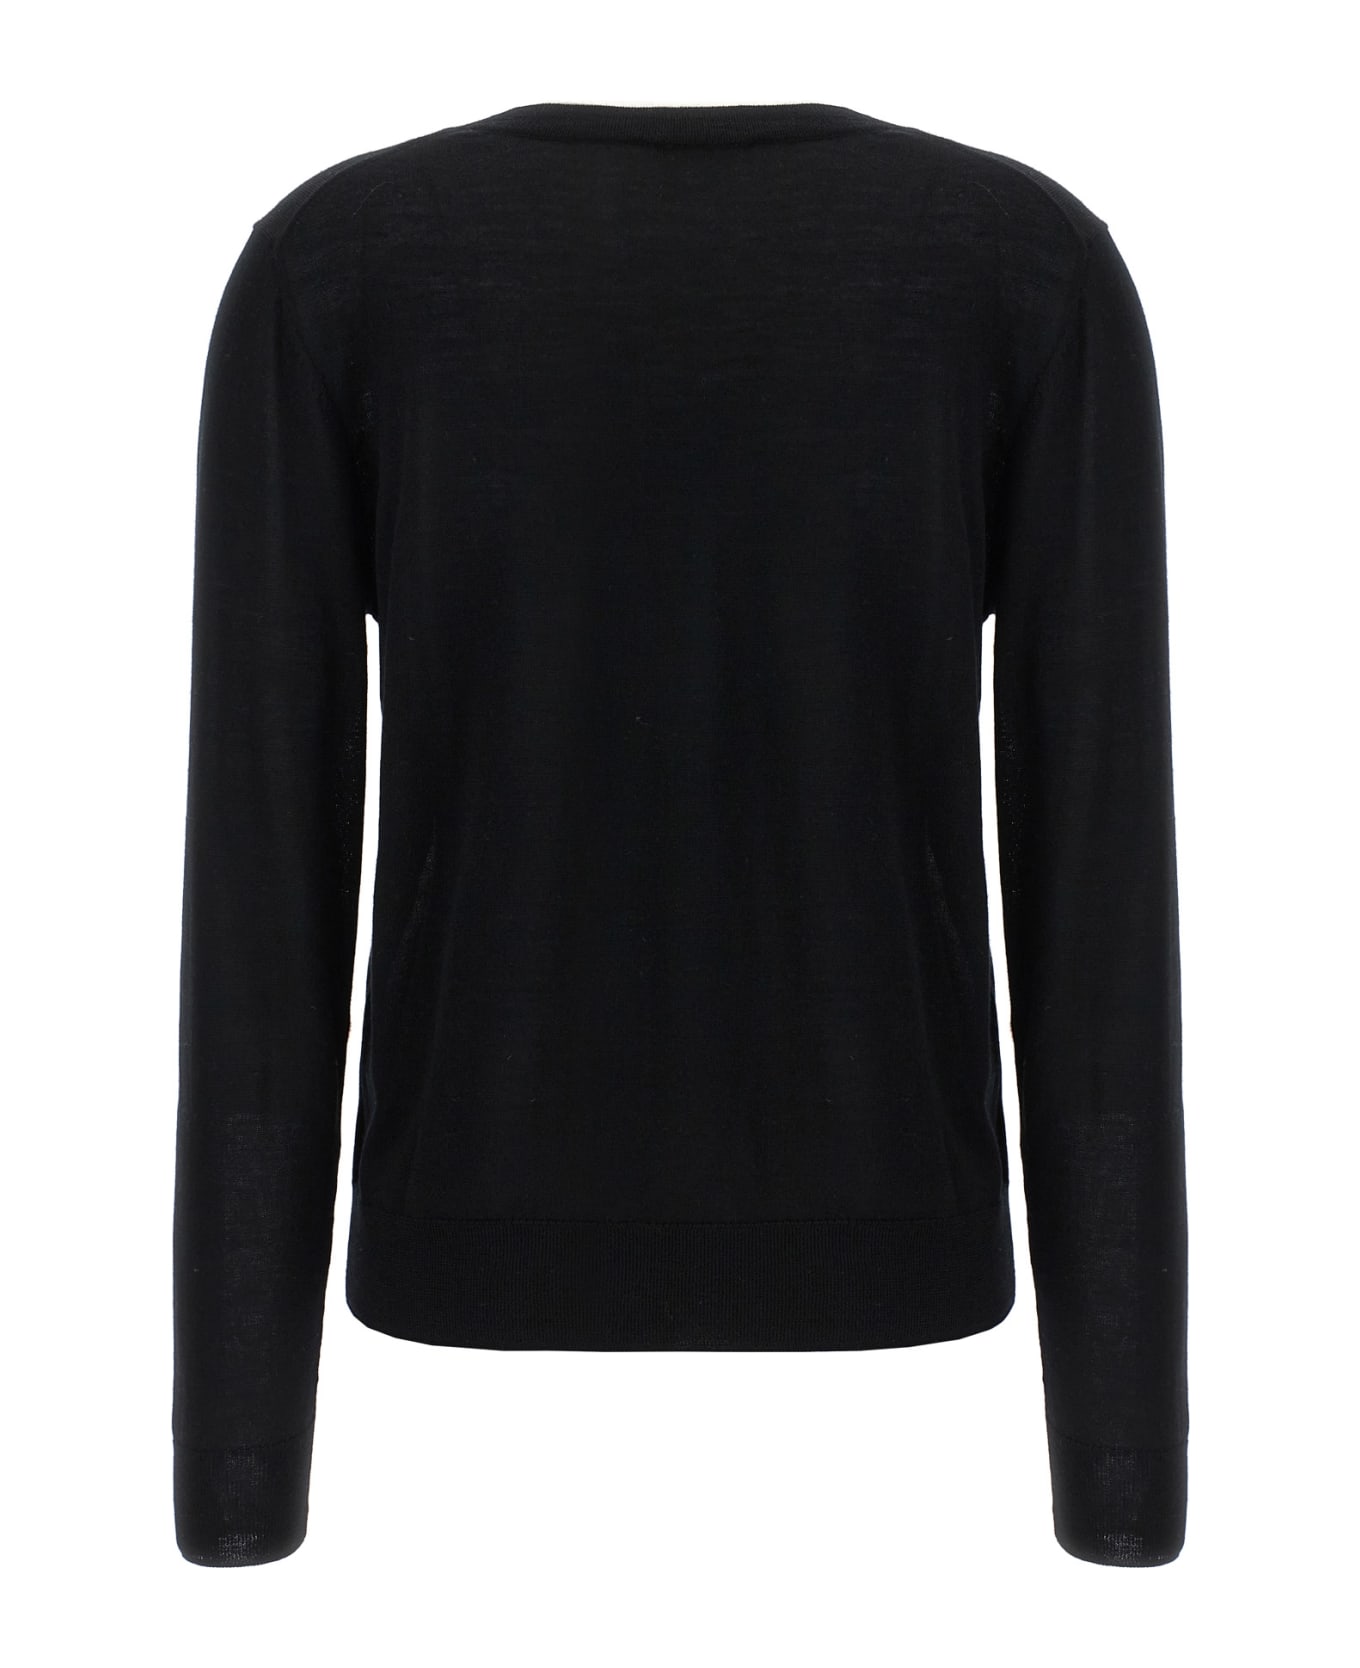 Parosh V-neck Sweater - Black ニットウェア